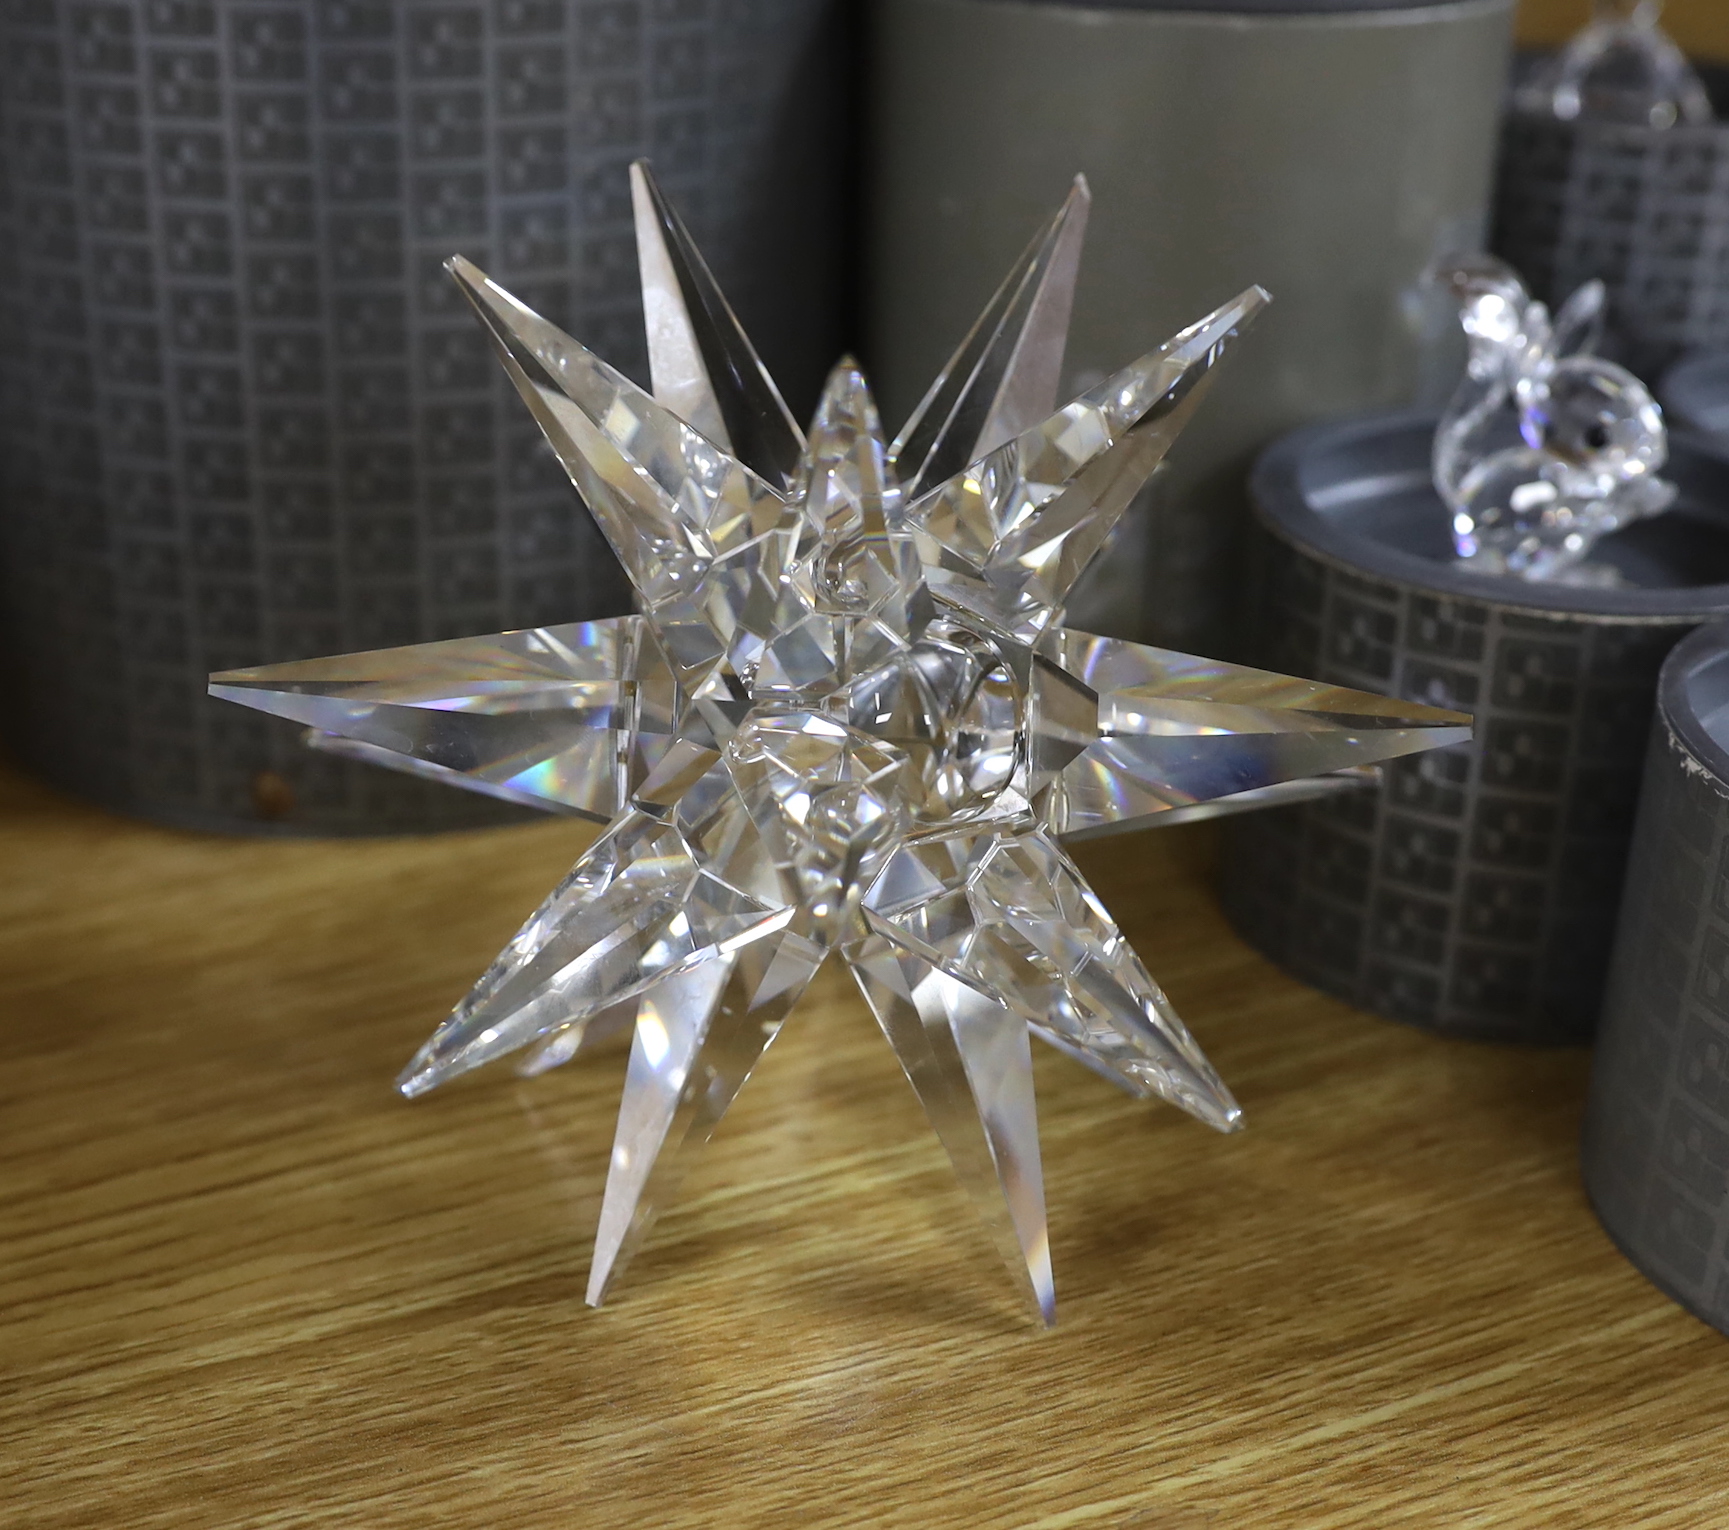 Swarovski Crystal - various boxed models, tallest star 11cm high (11)